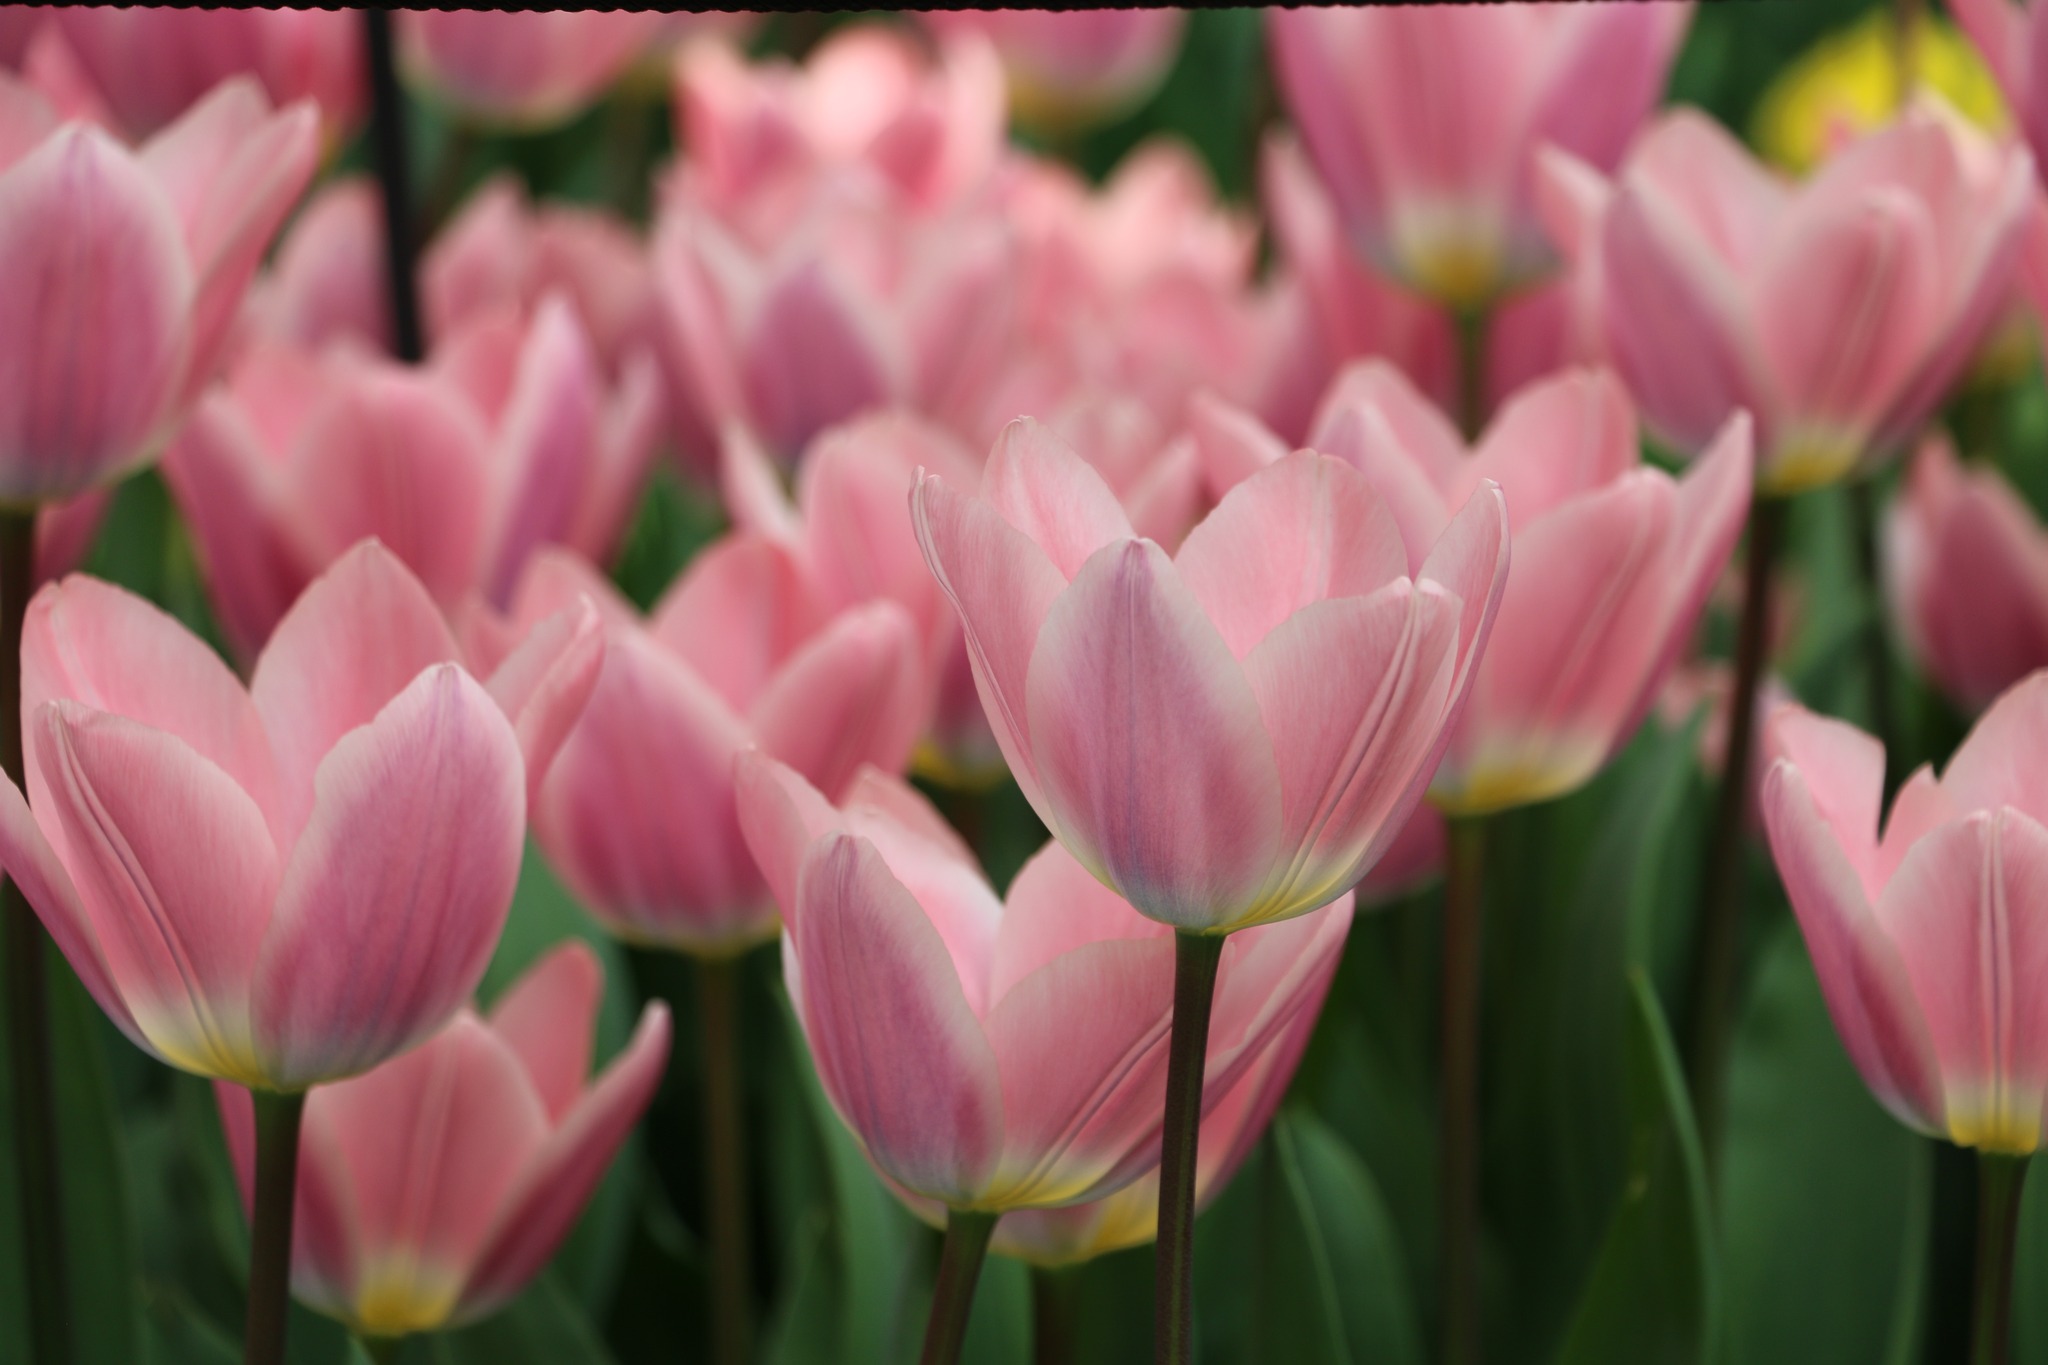 𝔸𝕣𝕖 𝕪𝕠𝕦 𝕒𝕝𝕤𝕠 𝕒 𝕗𝕒𝕟 𝕠𝕗 𝕡𝕚𝕟𝕜 𝕥𝕦𝕝𝕚𝕡𝕤...? 🌷

#tulips #pink #flowers #lisse #keukenhof #keukenhofgardens #bollenstreek #flowerbulbs #spring #lovepink #colours #holland #netherlands #hollandtrip #dutch #flowerpower #tulpenliebe #tulipas